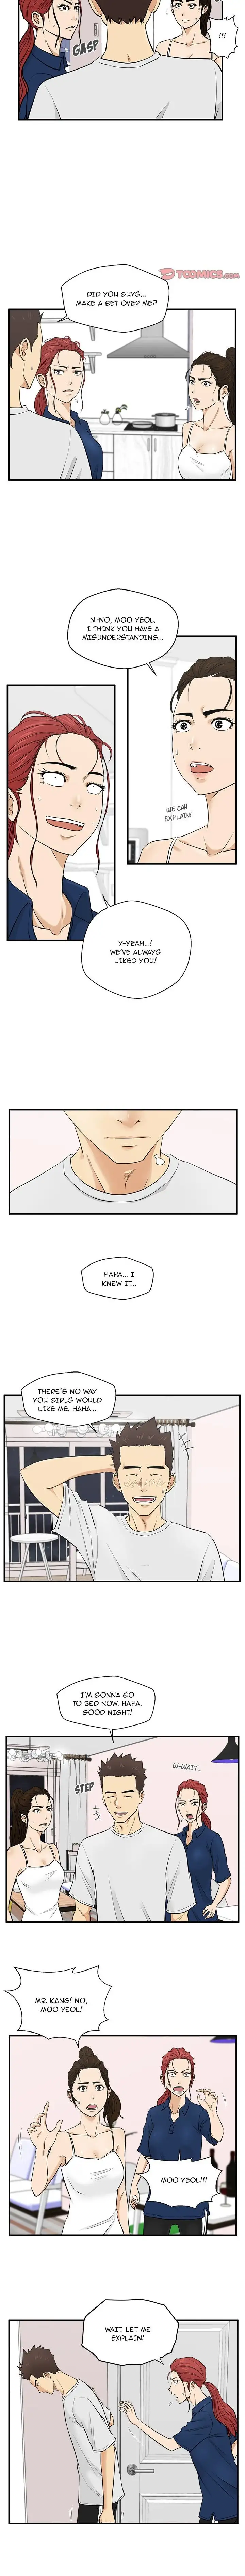 Mr. Kang - Chapter 55 Page 7